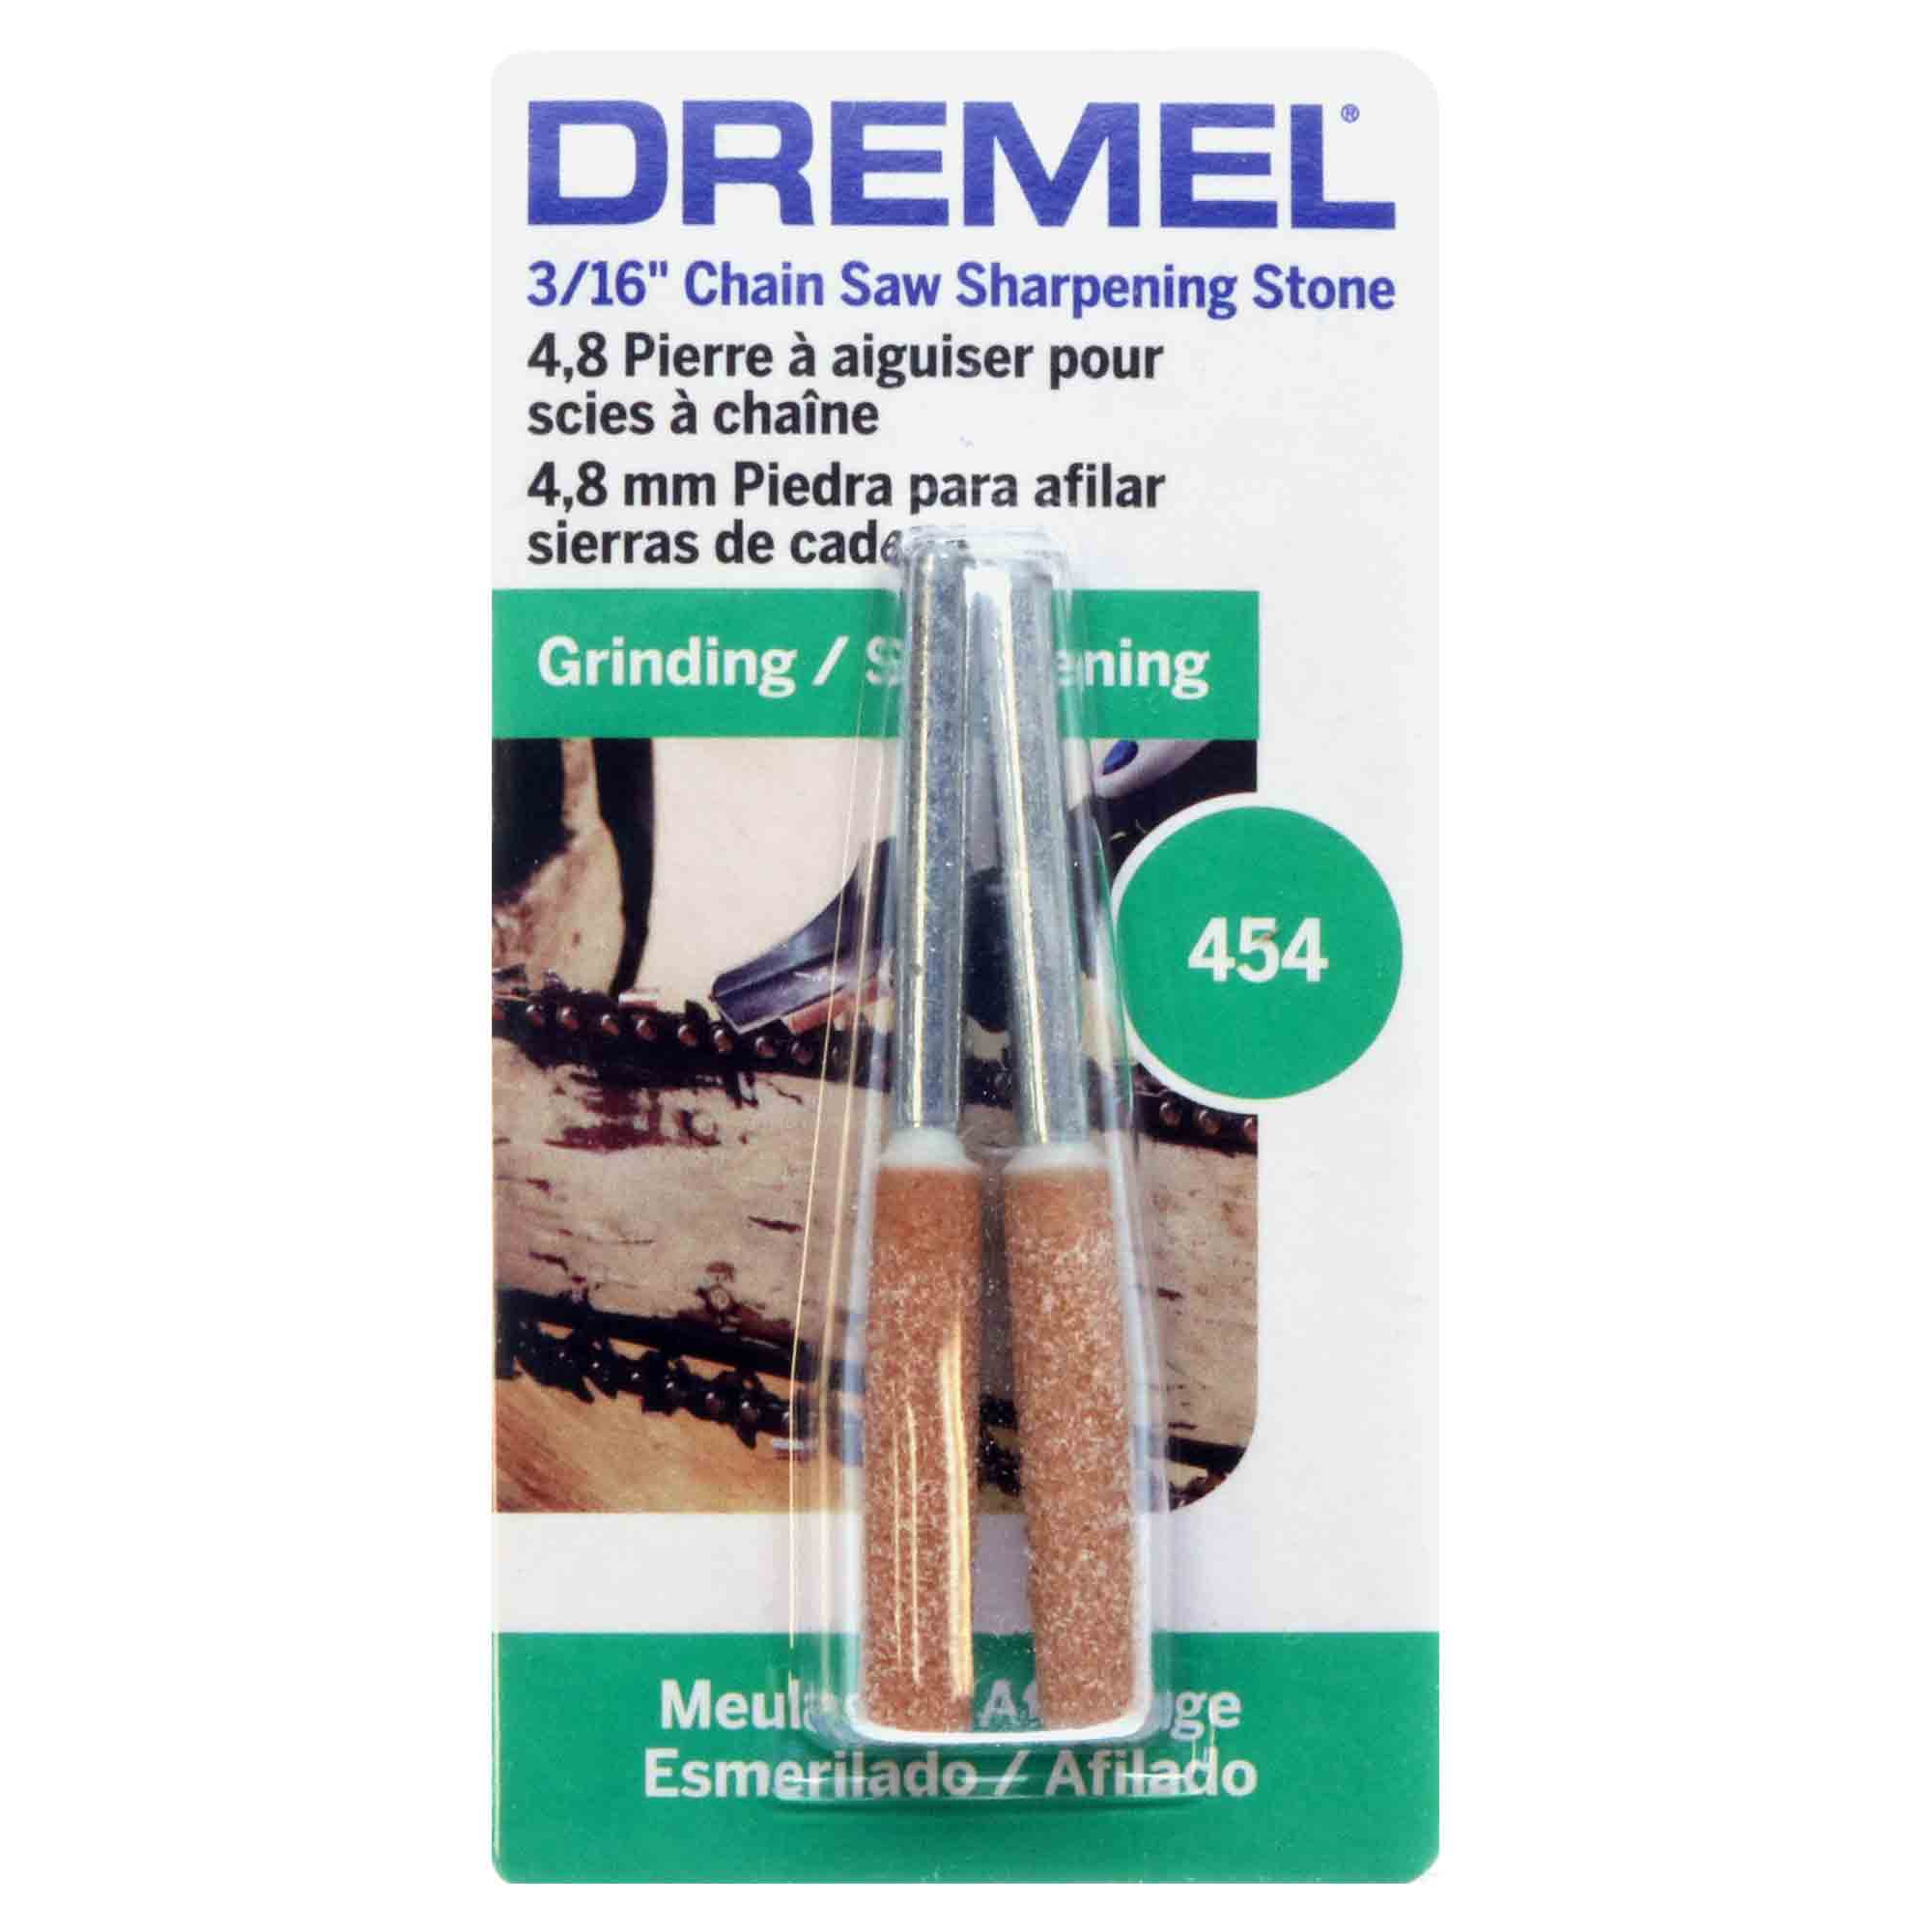 Dremel 454 - Chain Saw Sharpening Stone 3/16 inch - 2pc